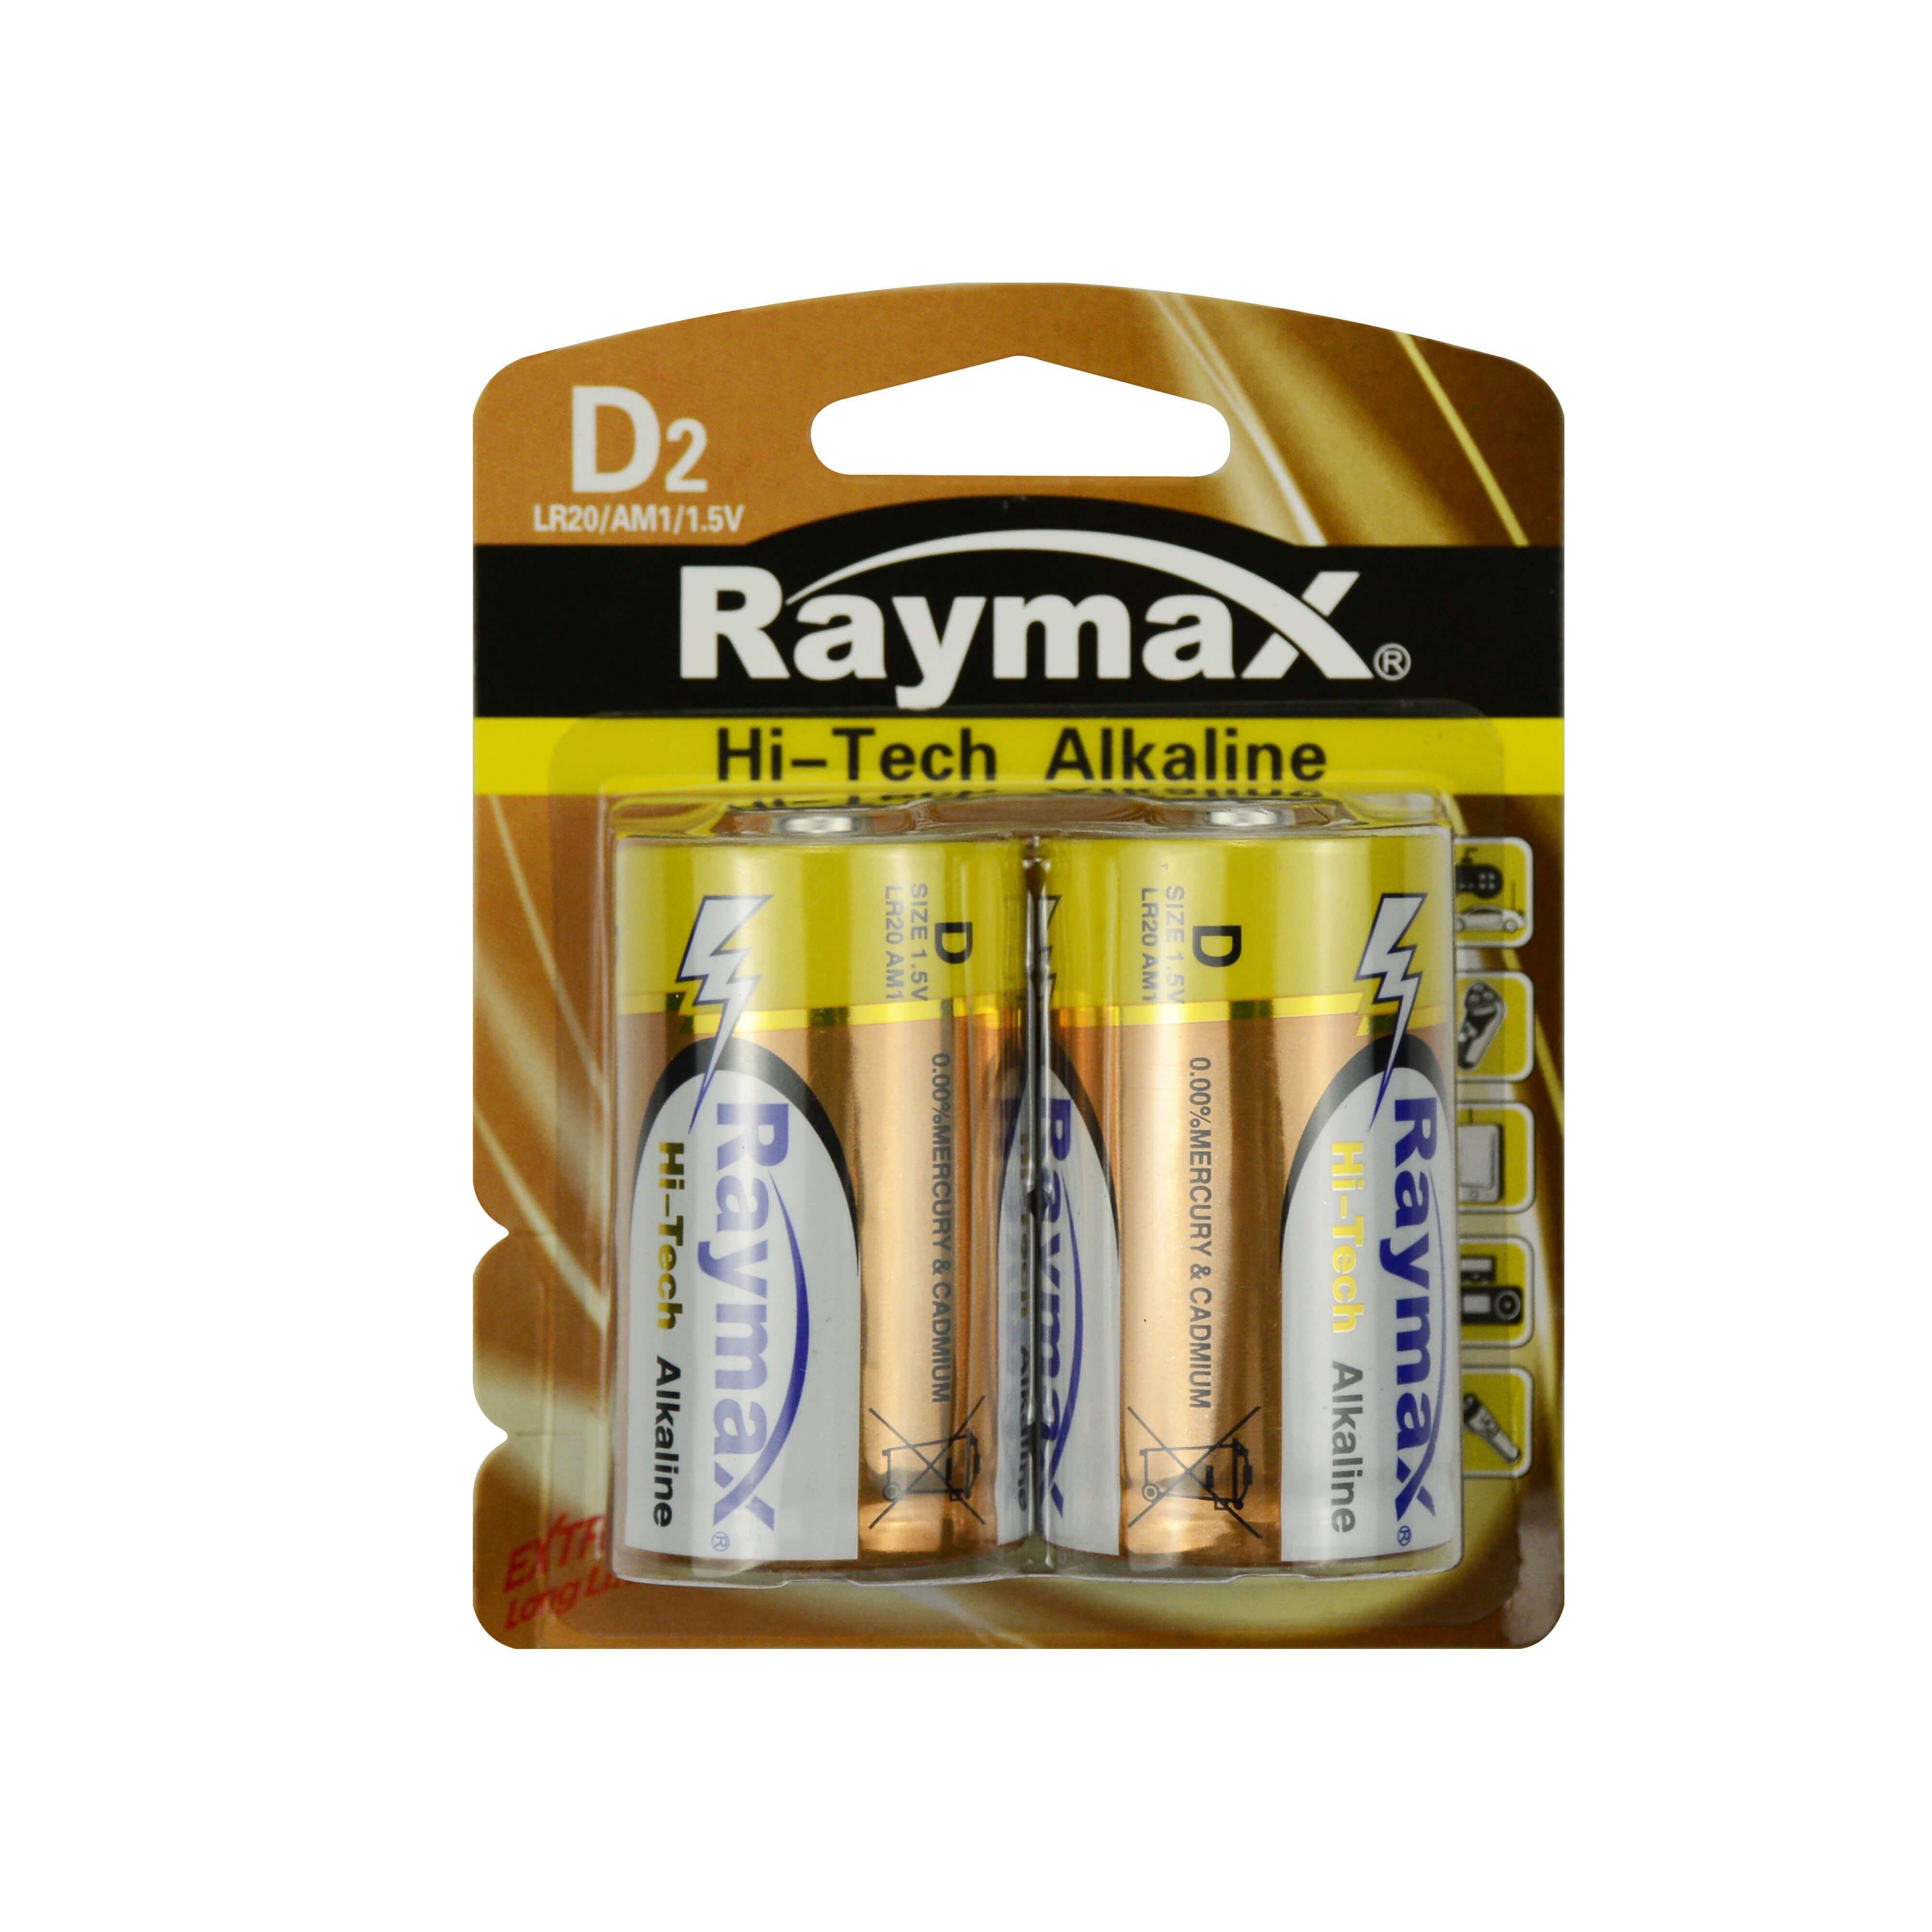 Raymax no mercury hi-tech D alkaline battery LR20, 2 bulk pack